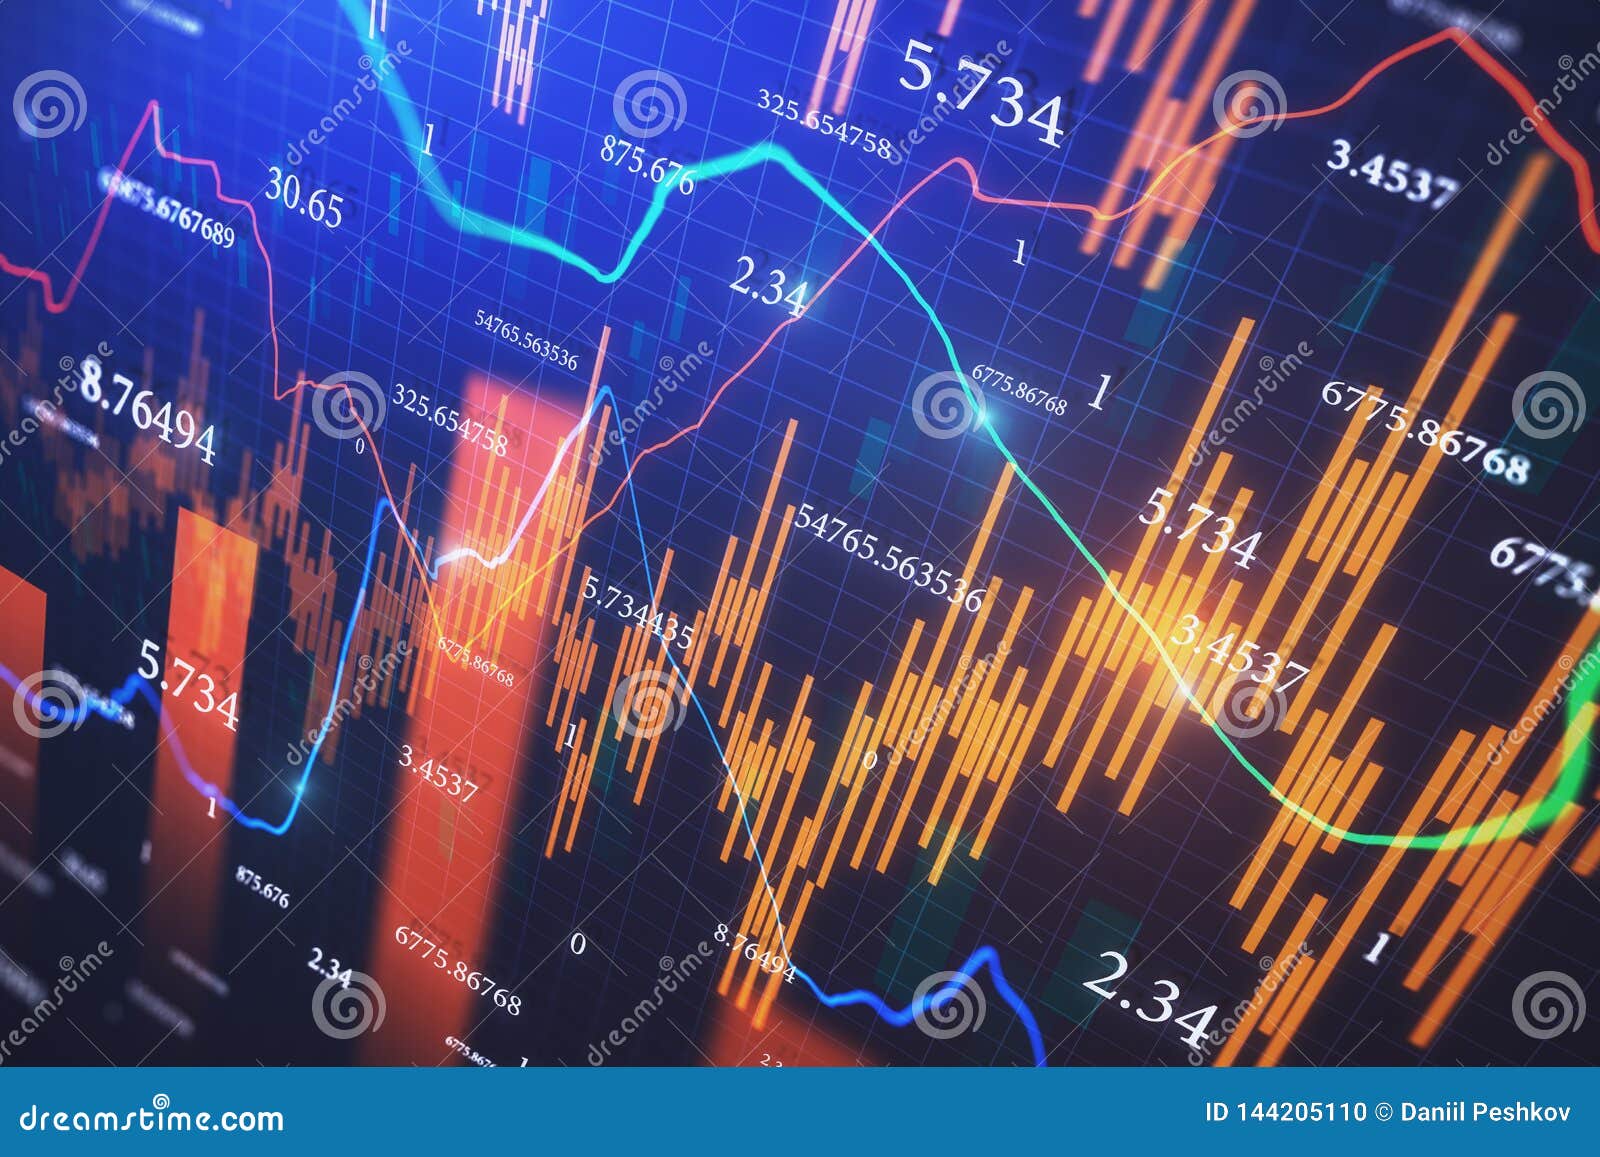 Trade And Economy Wallpaper Stock Photo Image Of Code Analysis - 